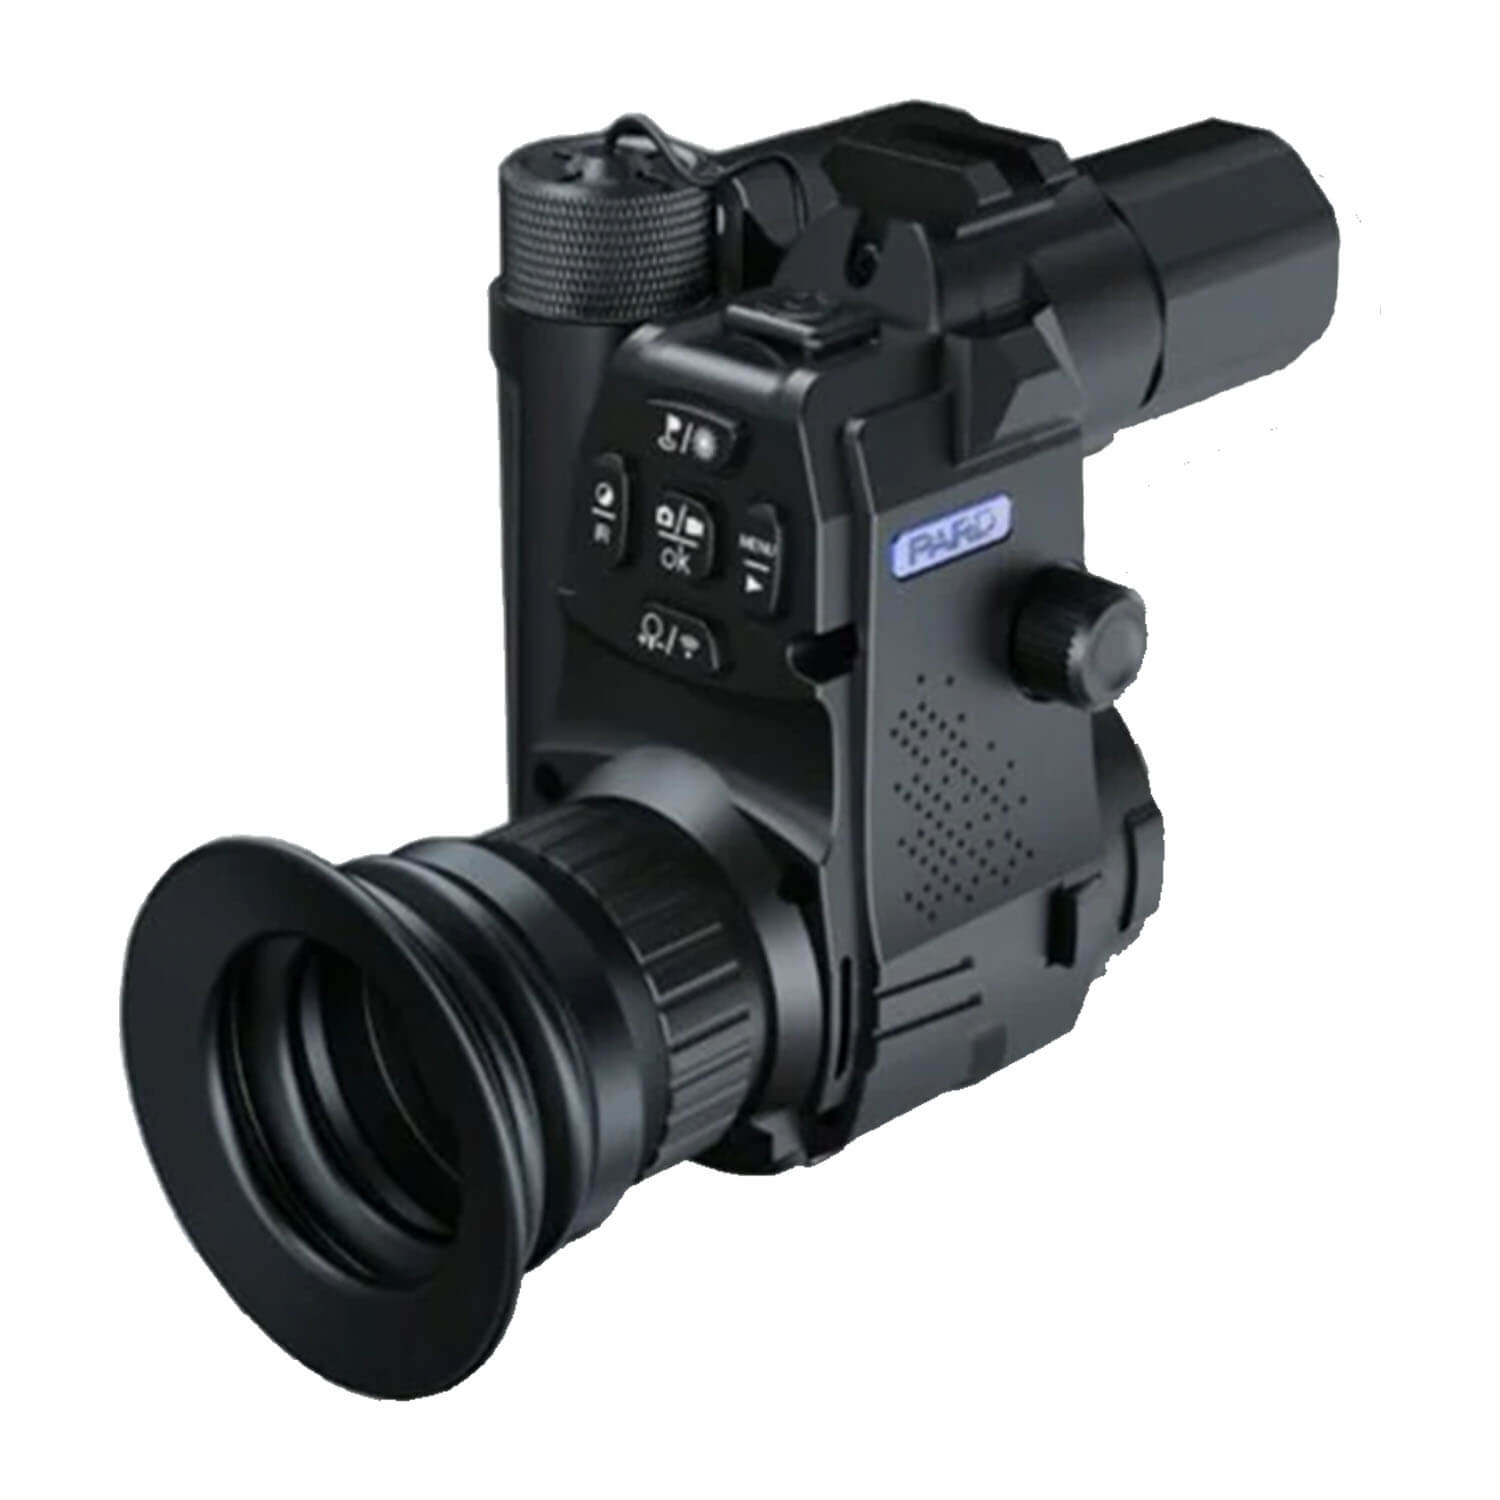 Pard night vision strap on 007SP LRF 850mn